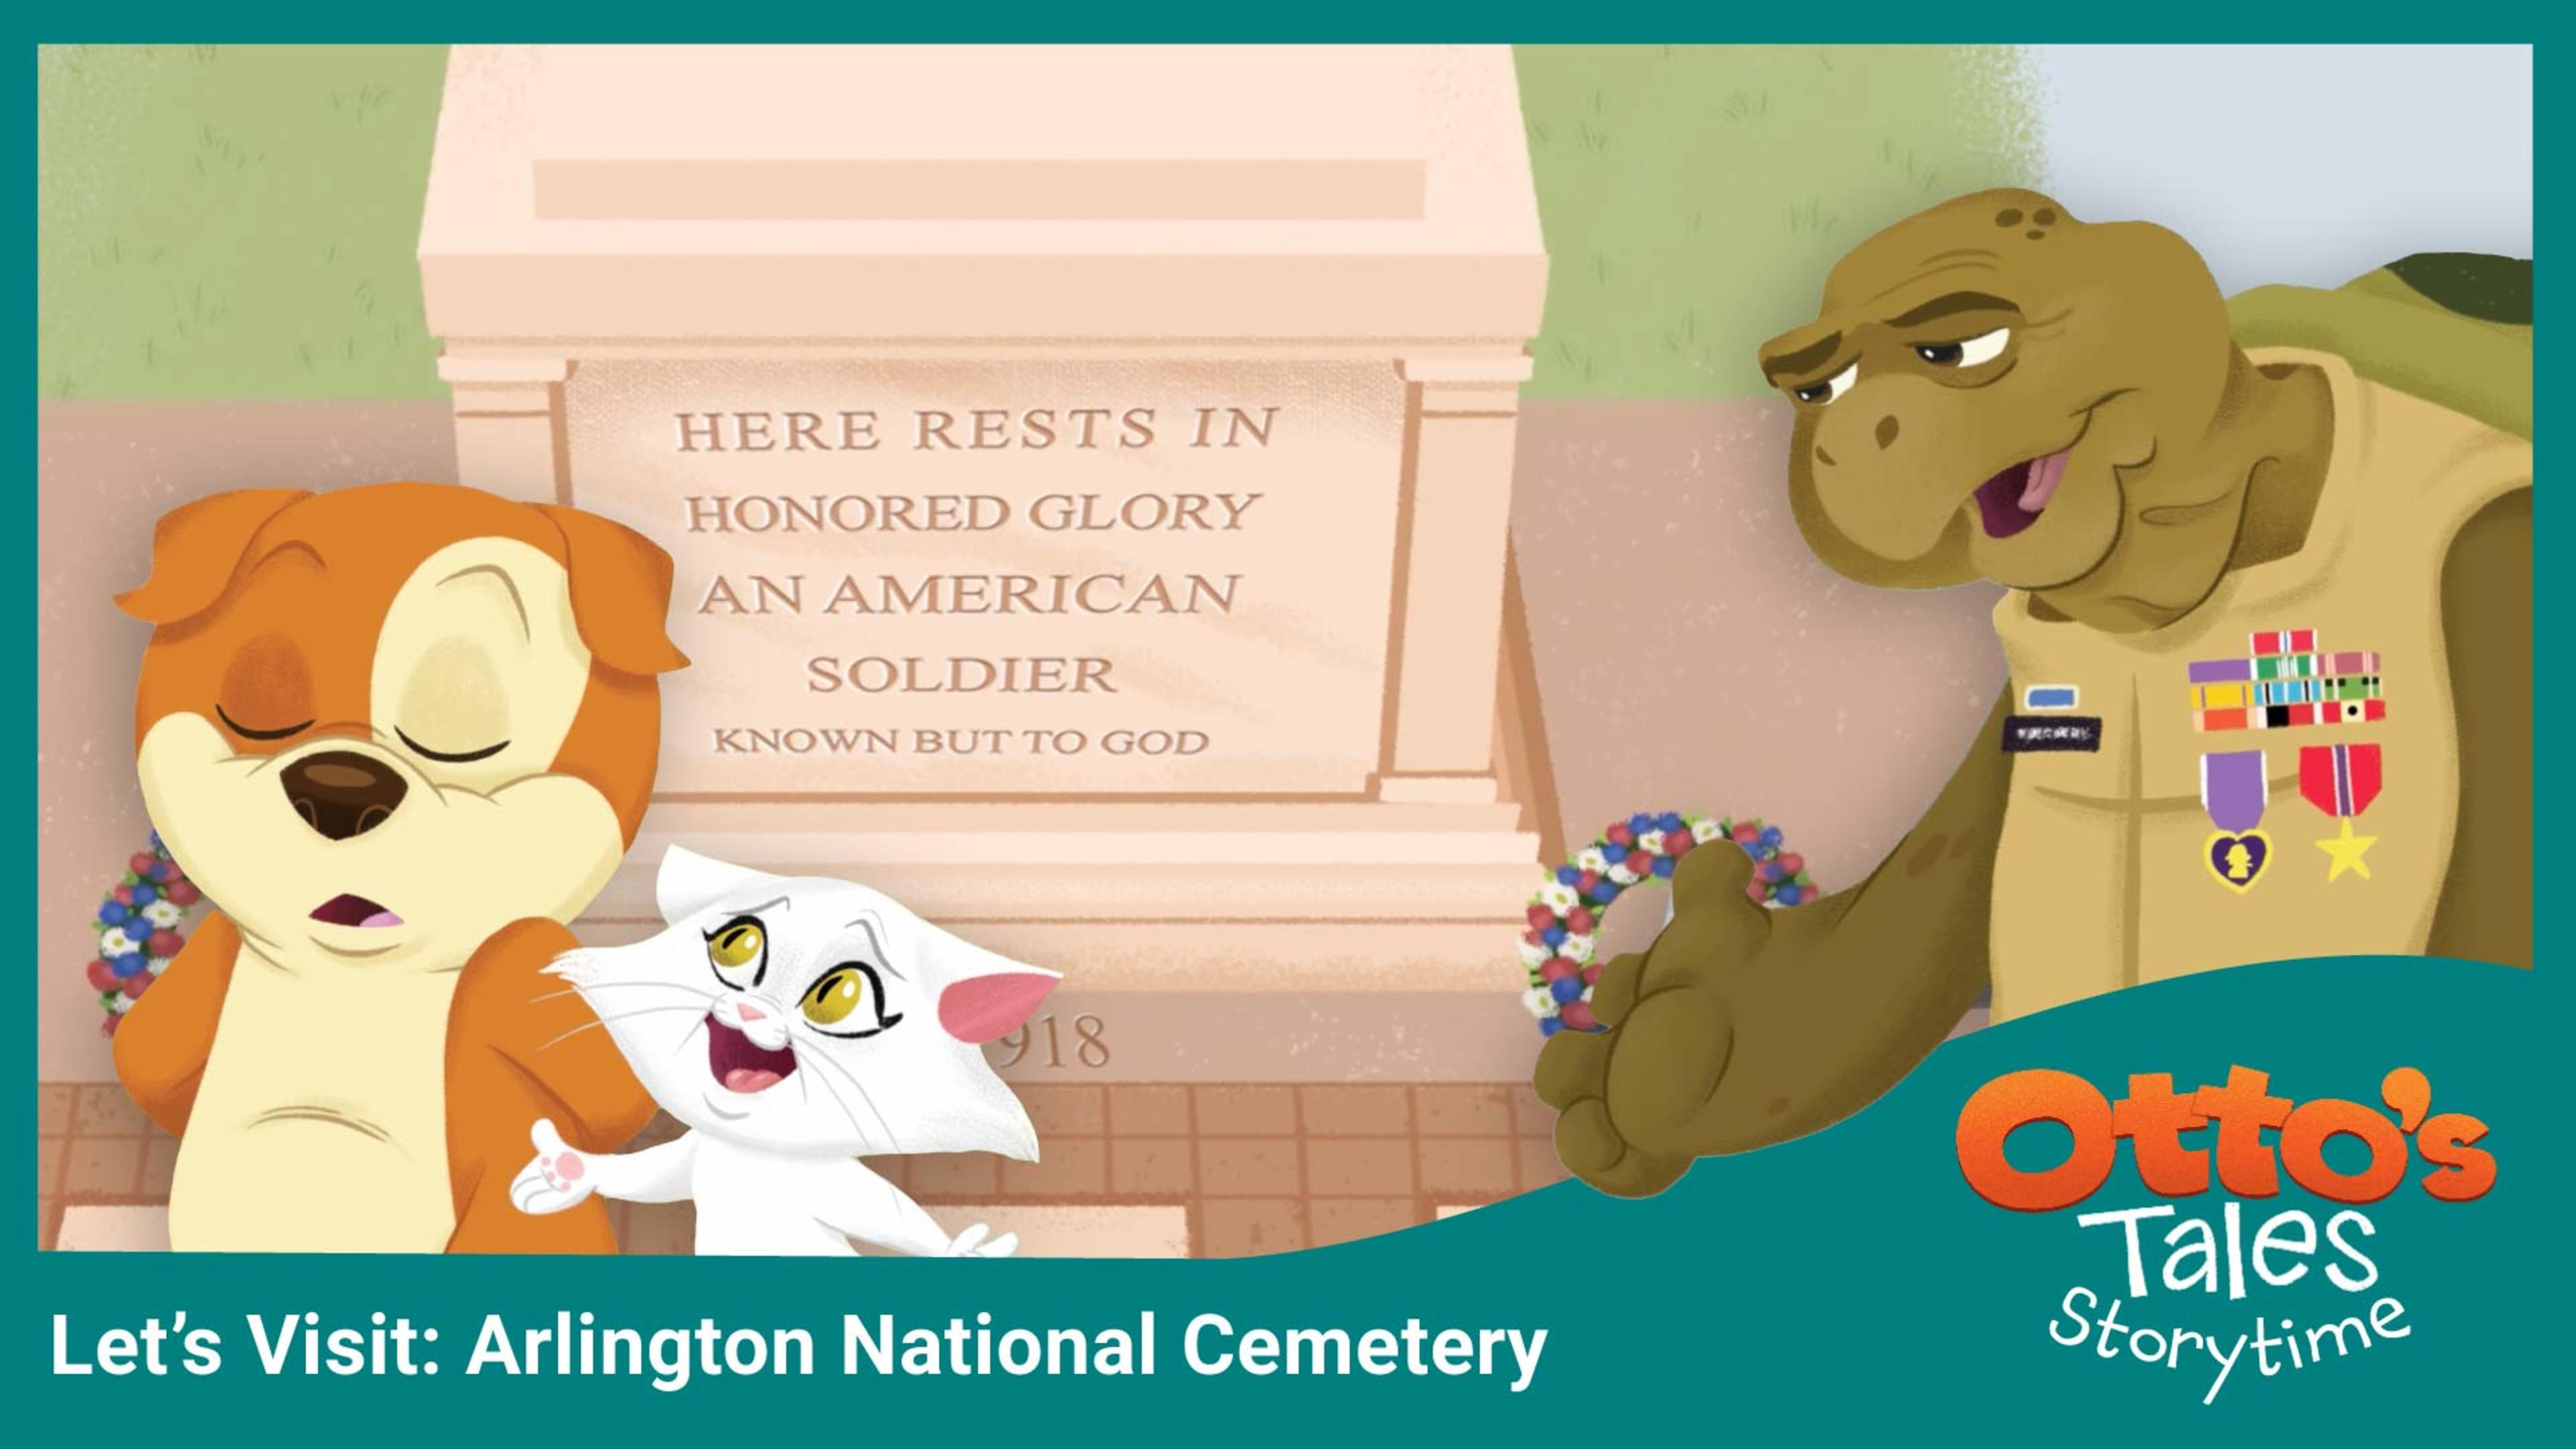 Let's Visit Arlington National Cemetery